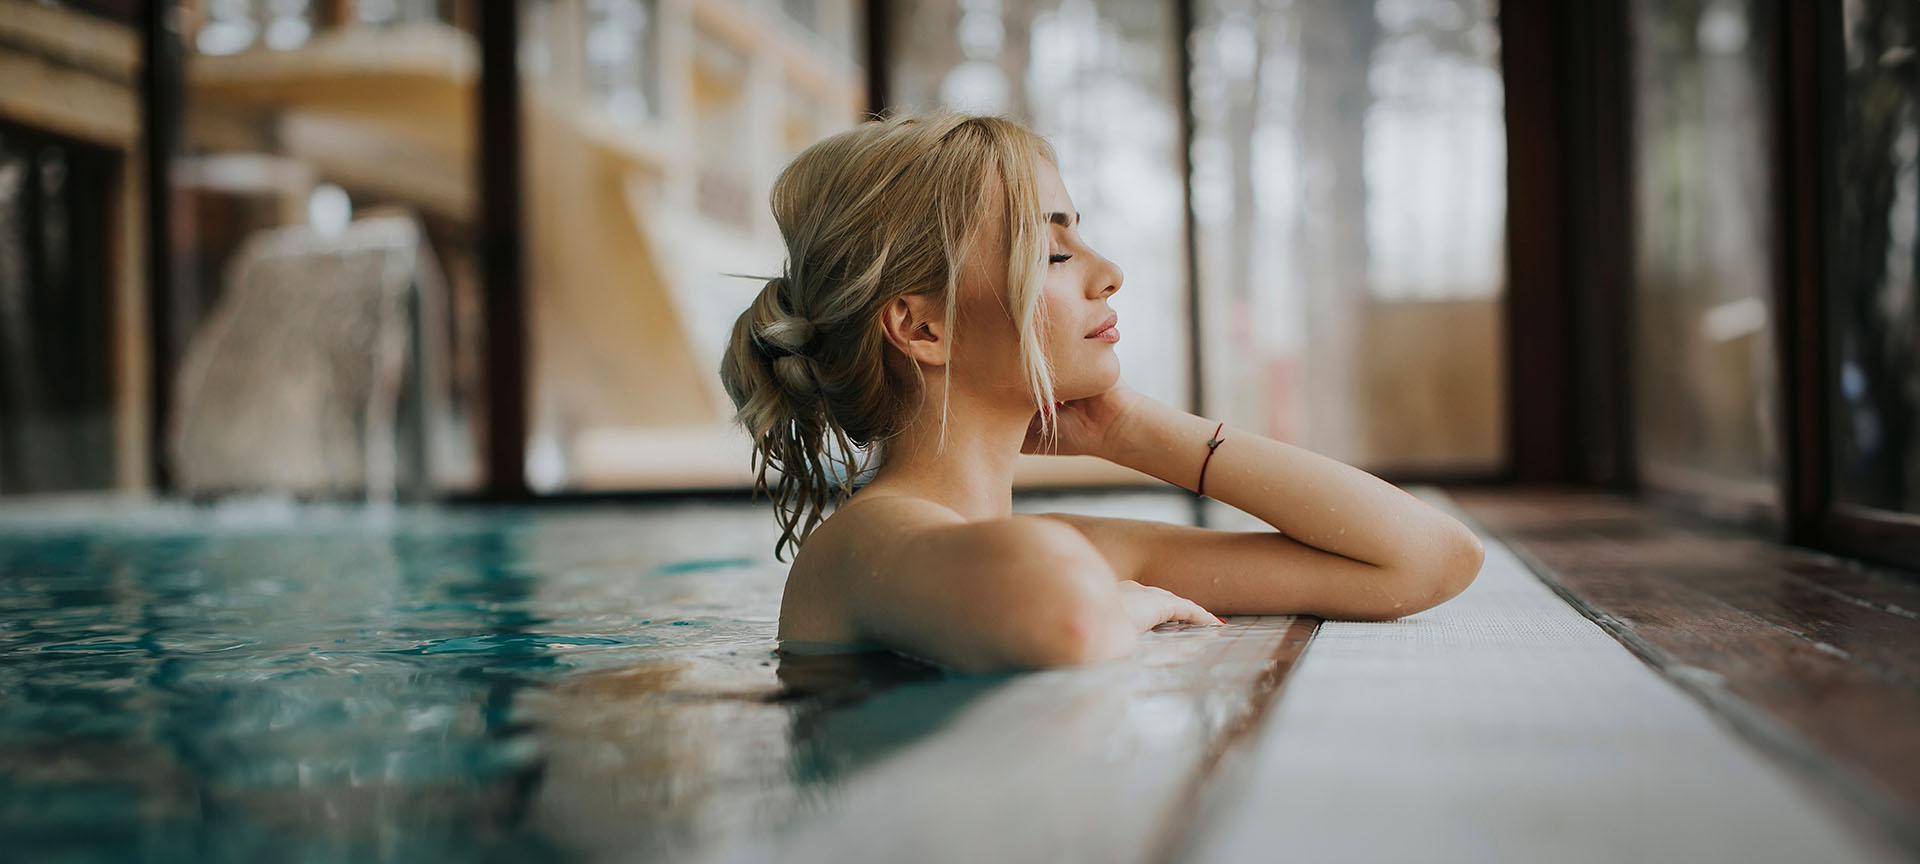 Vrouw ontspant in zwembad binnen spa.